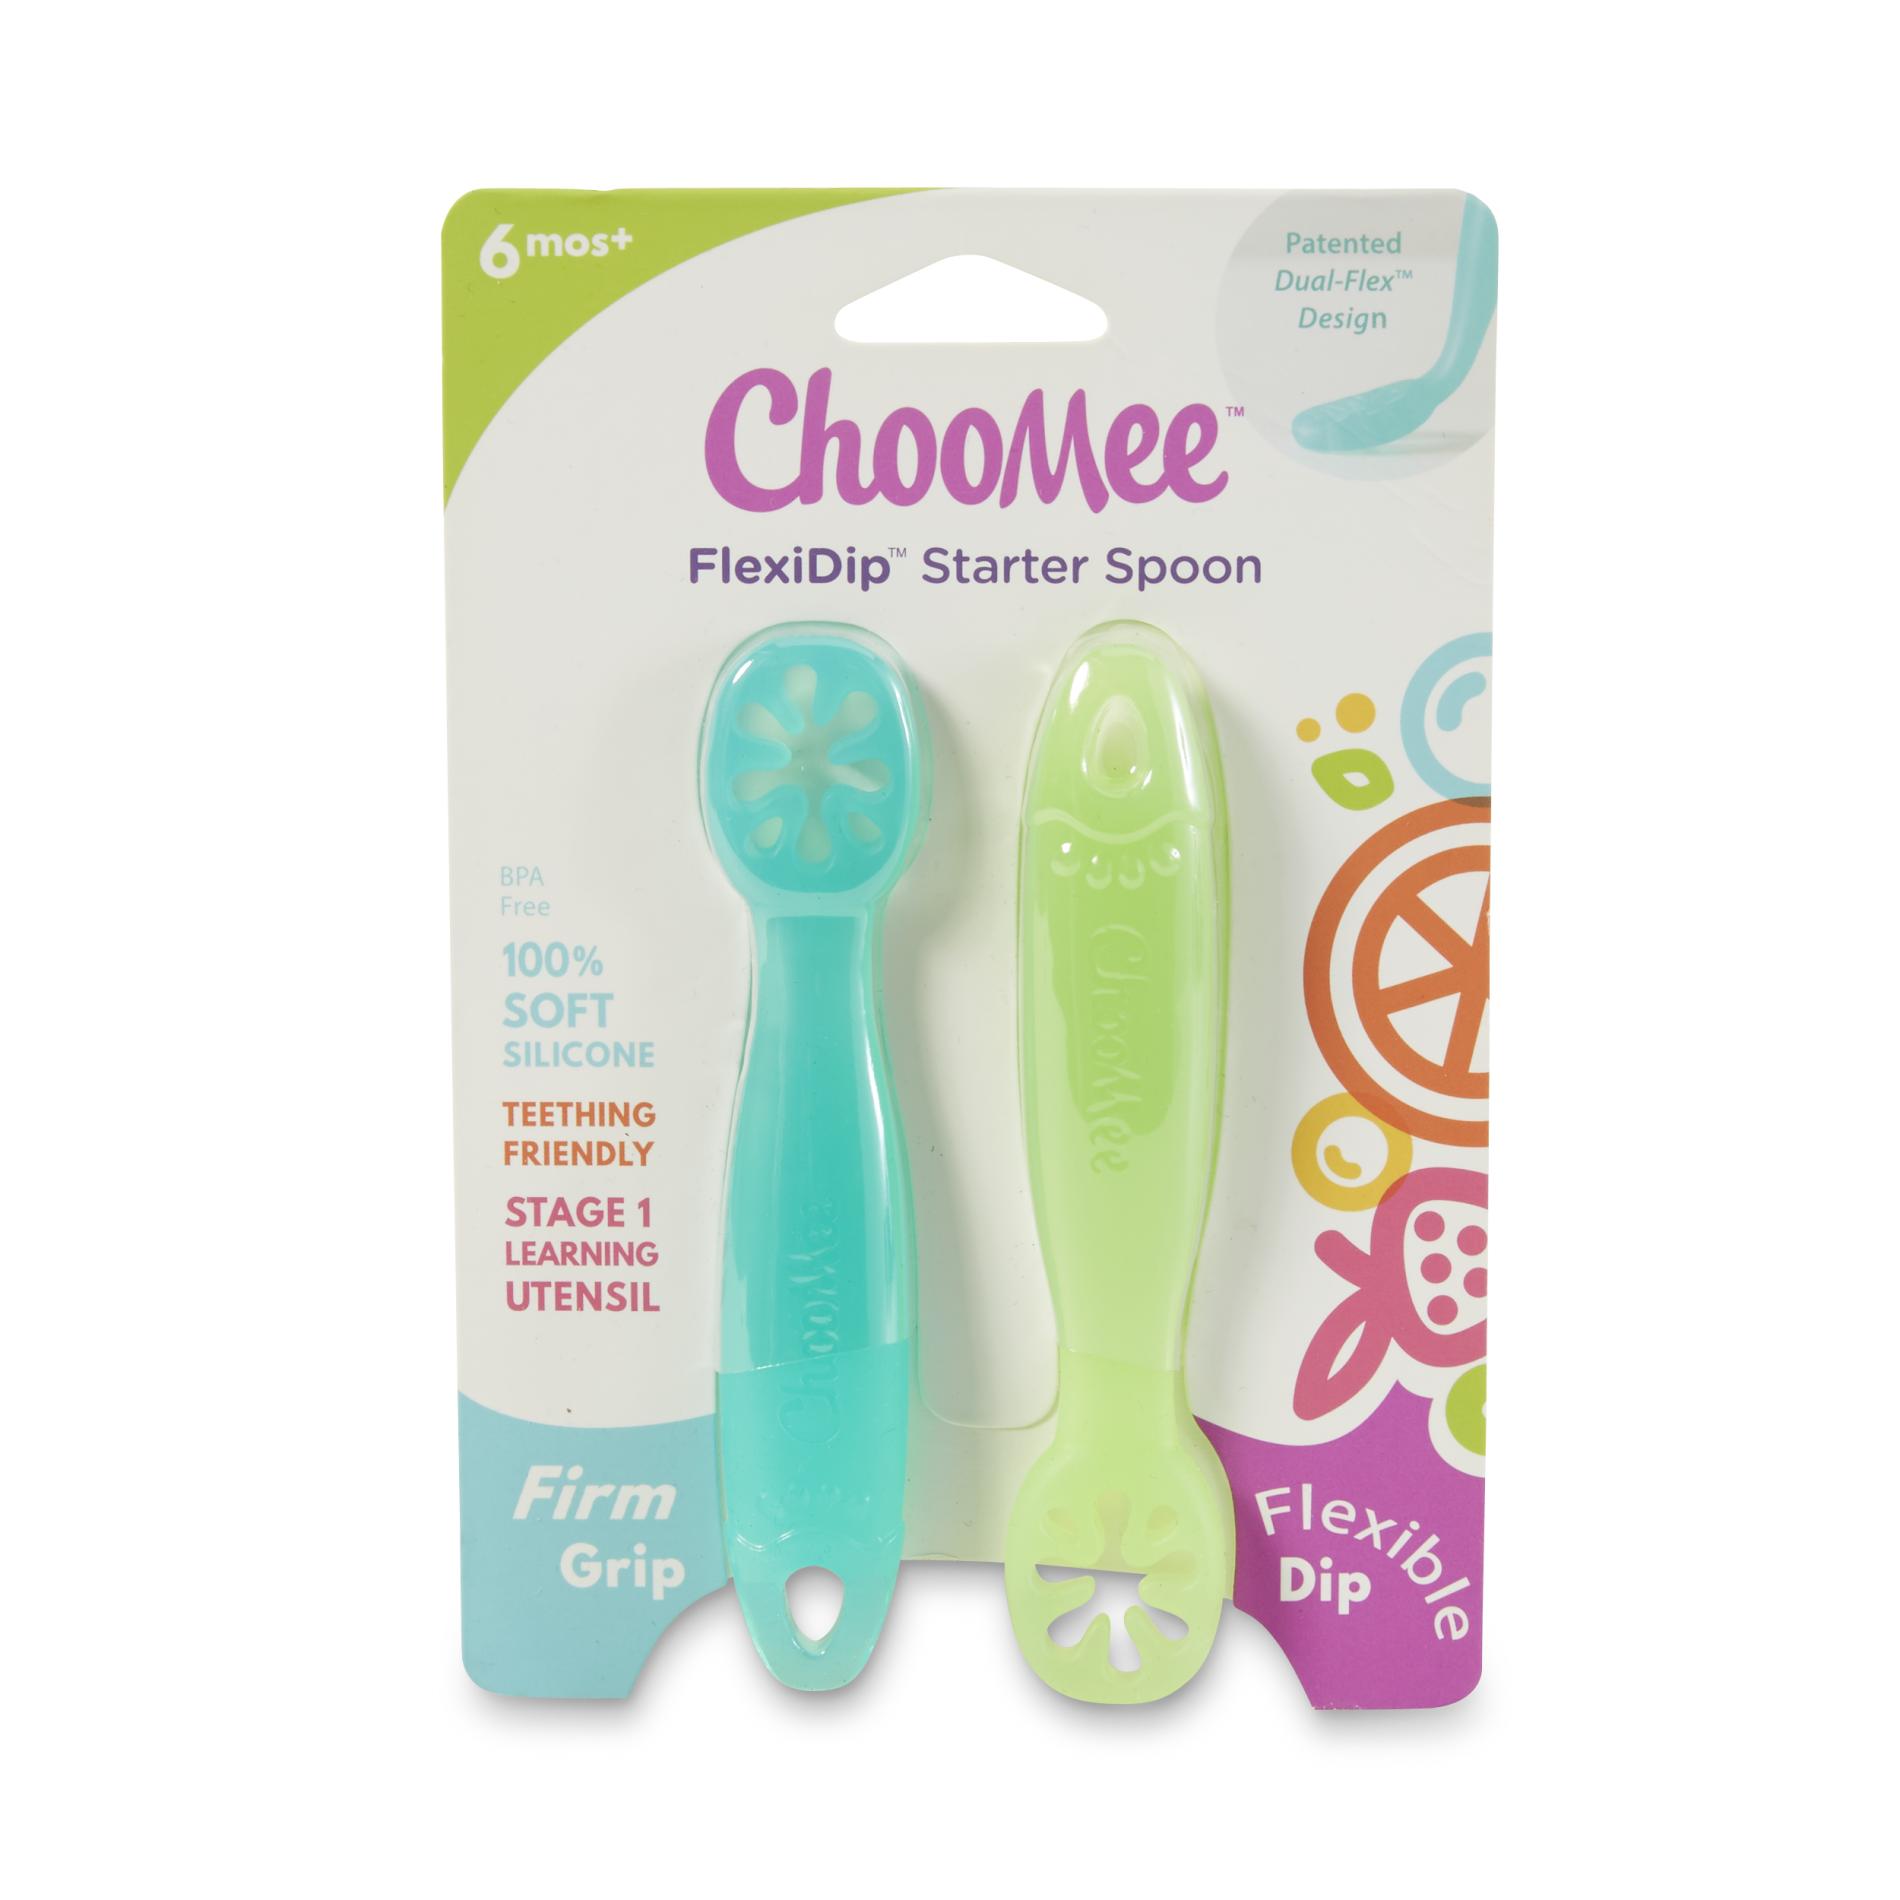 ChooMee FlexiDip Infants' 2-Pack Starter Spoons